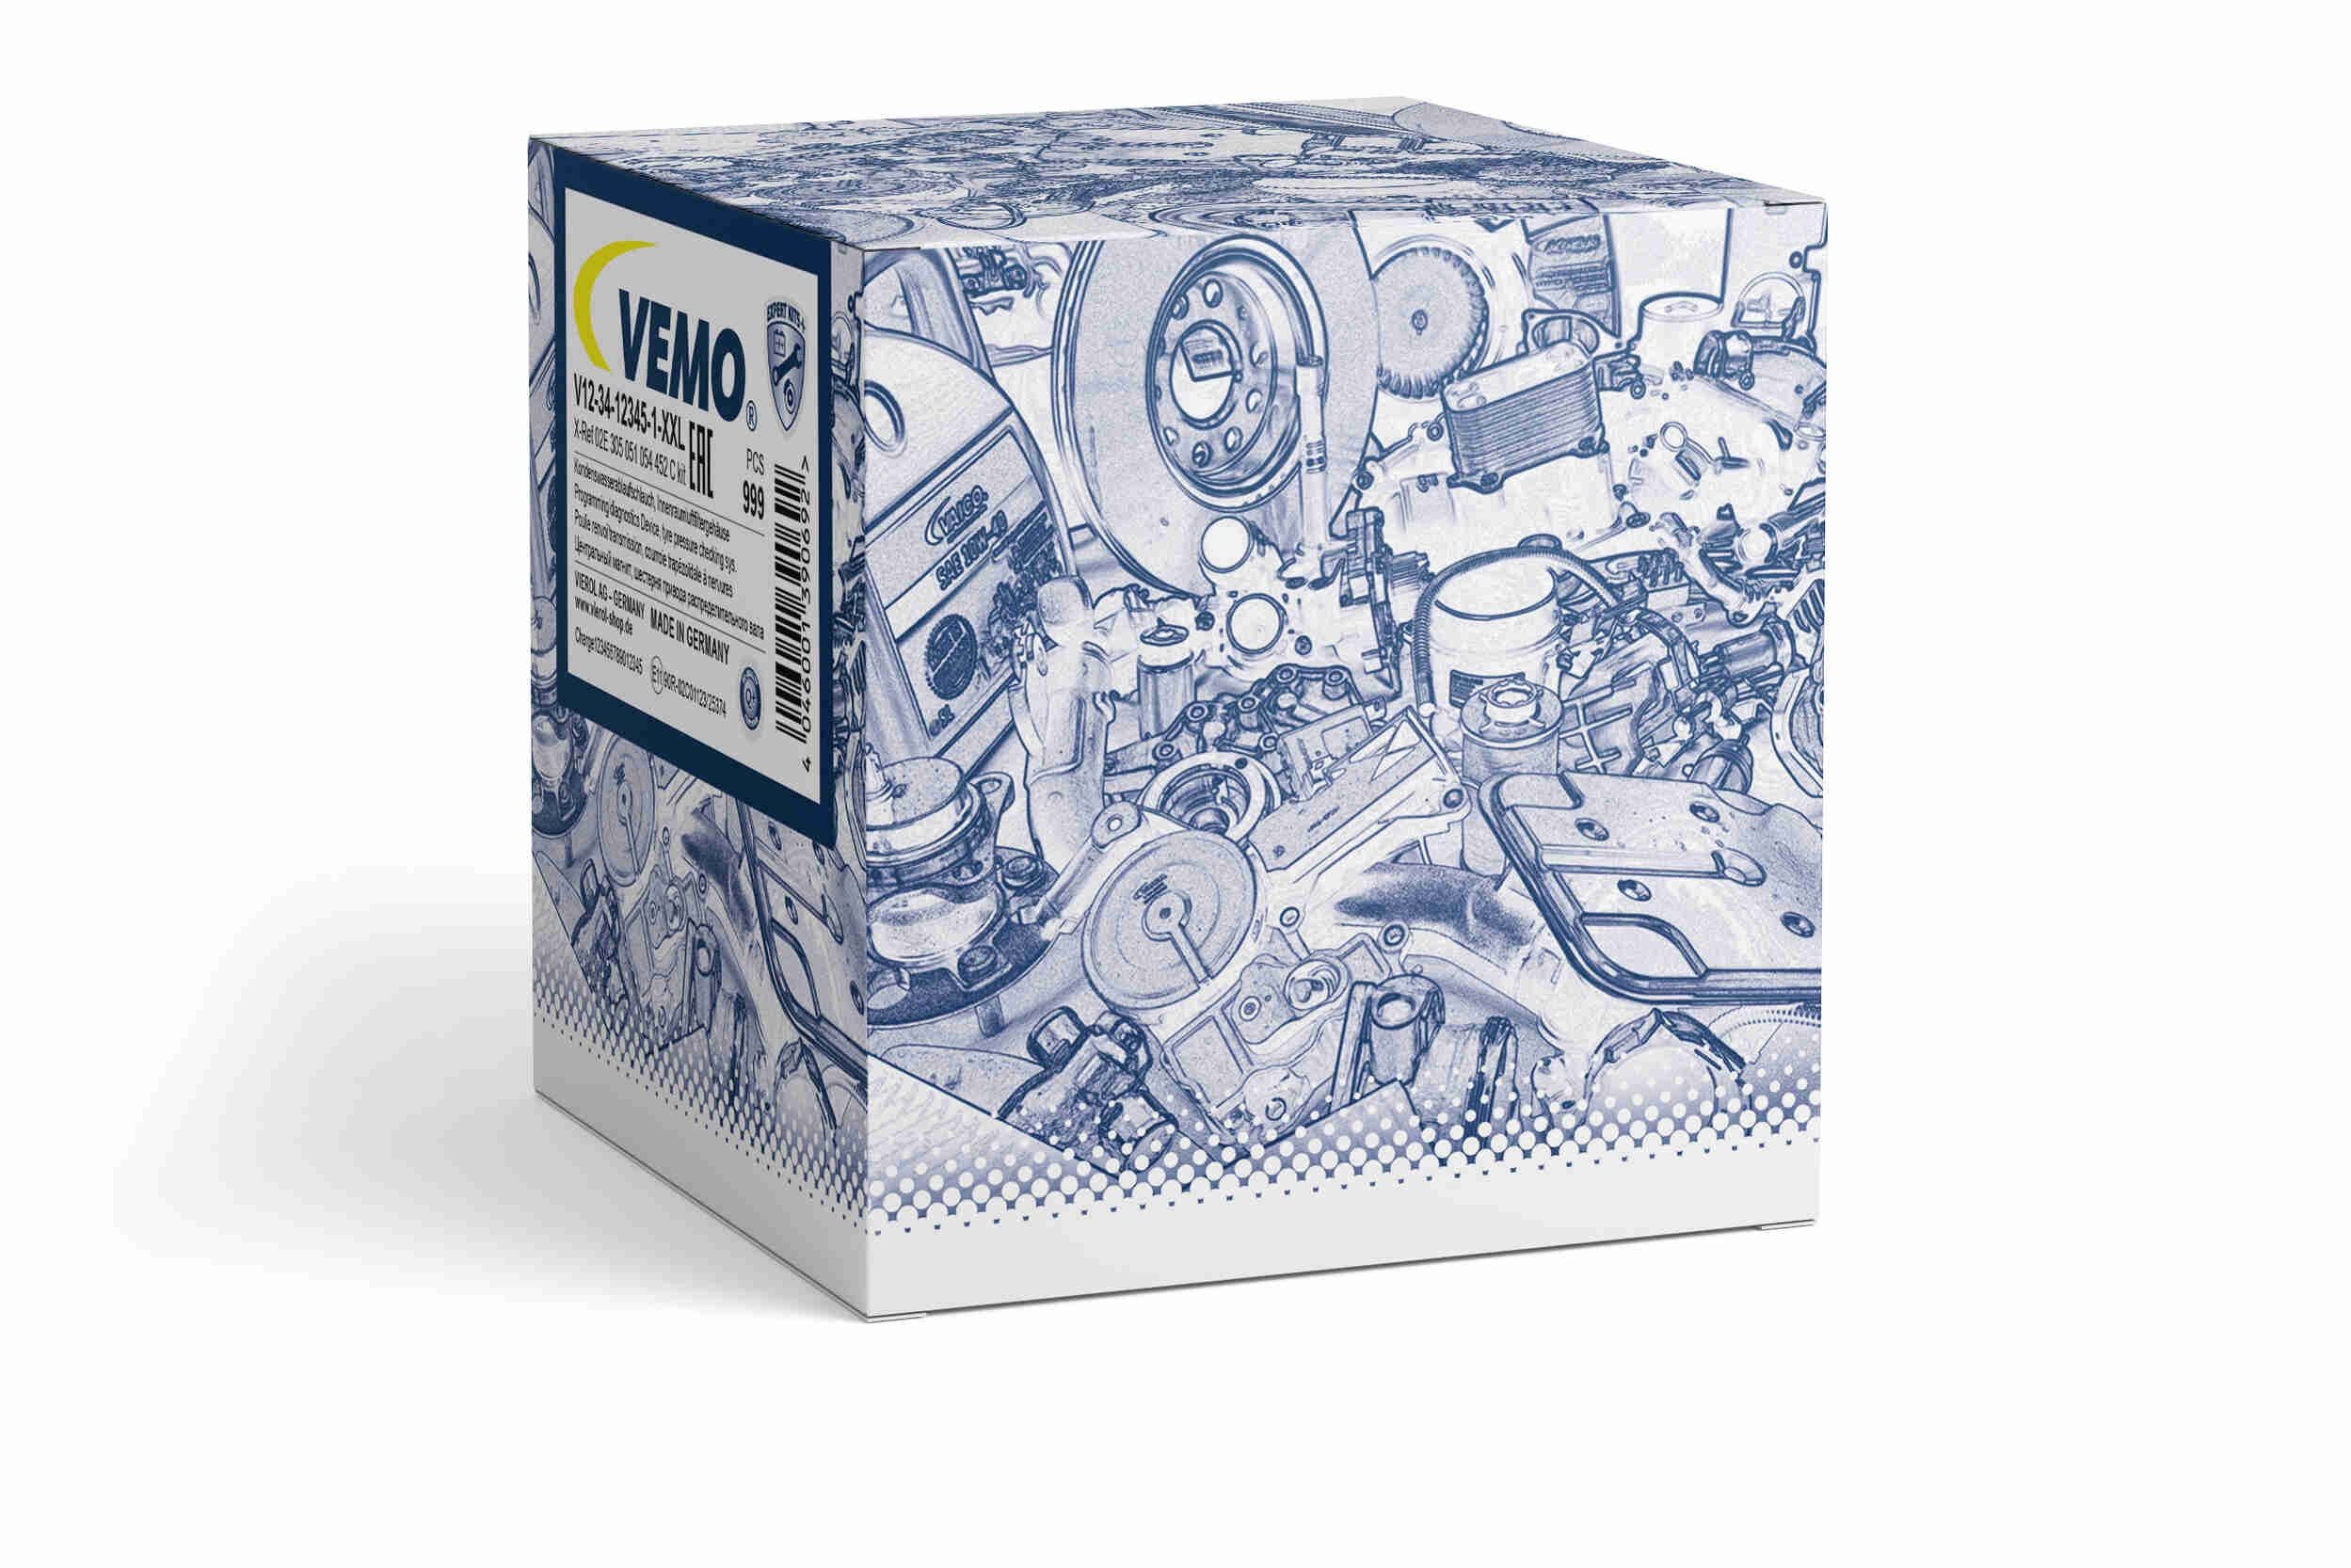 VEMO Original Quality V10-06-0010 Klimatrockner Aluminium ▷ AUTODOC Preis  und Erfahrung